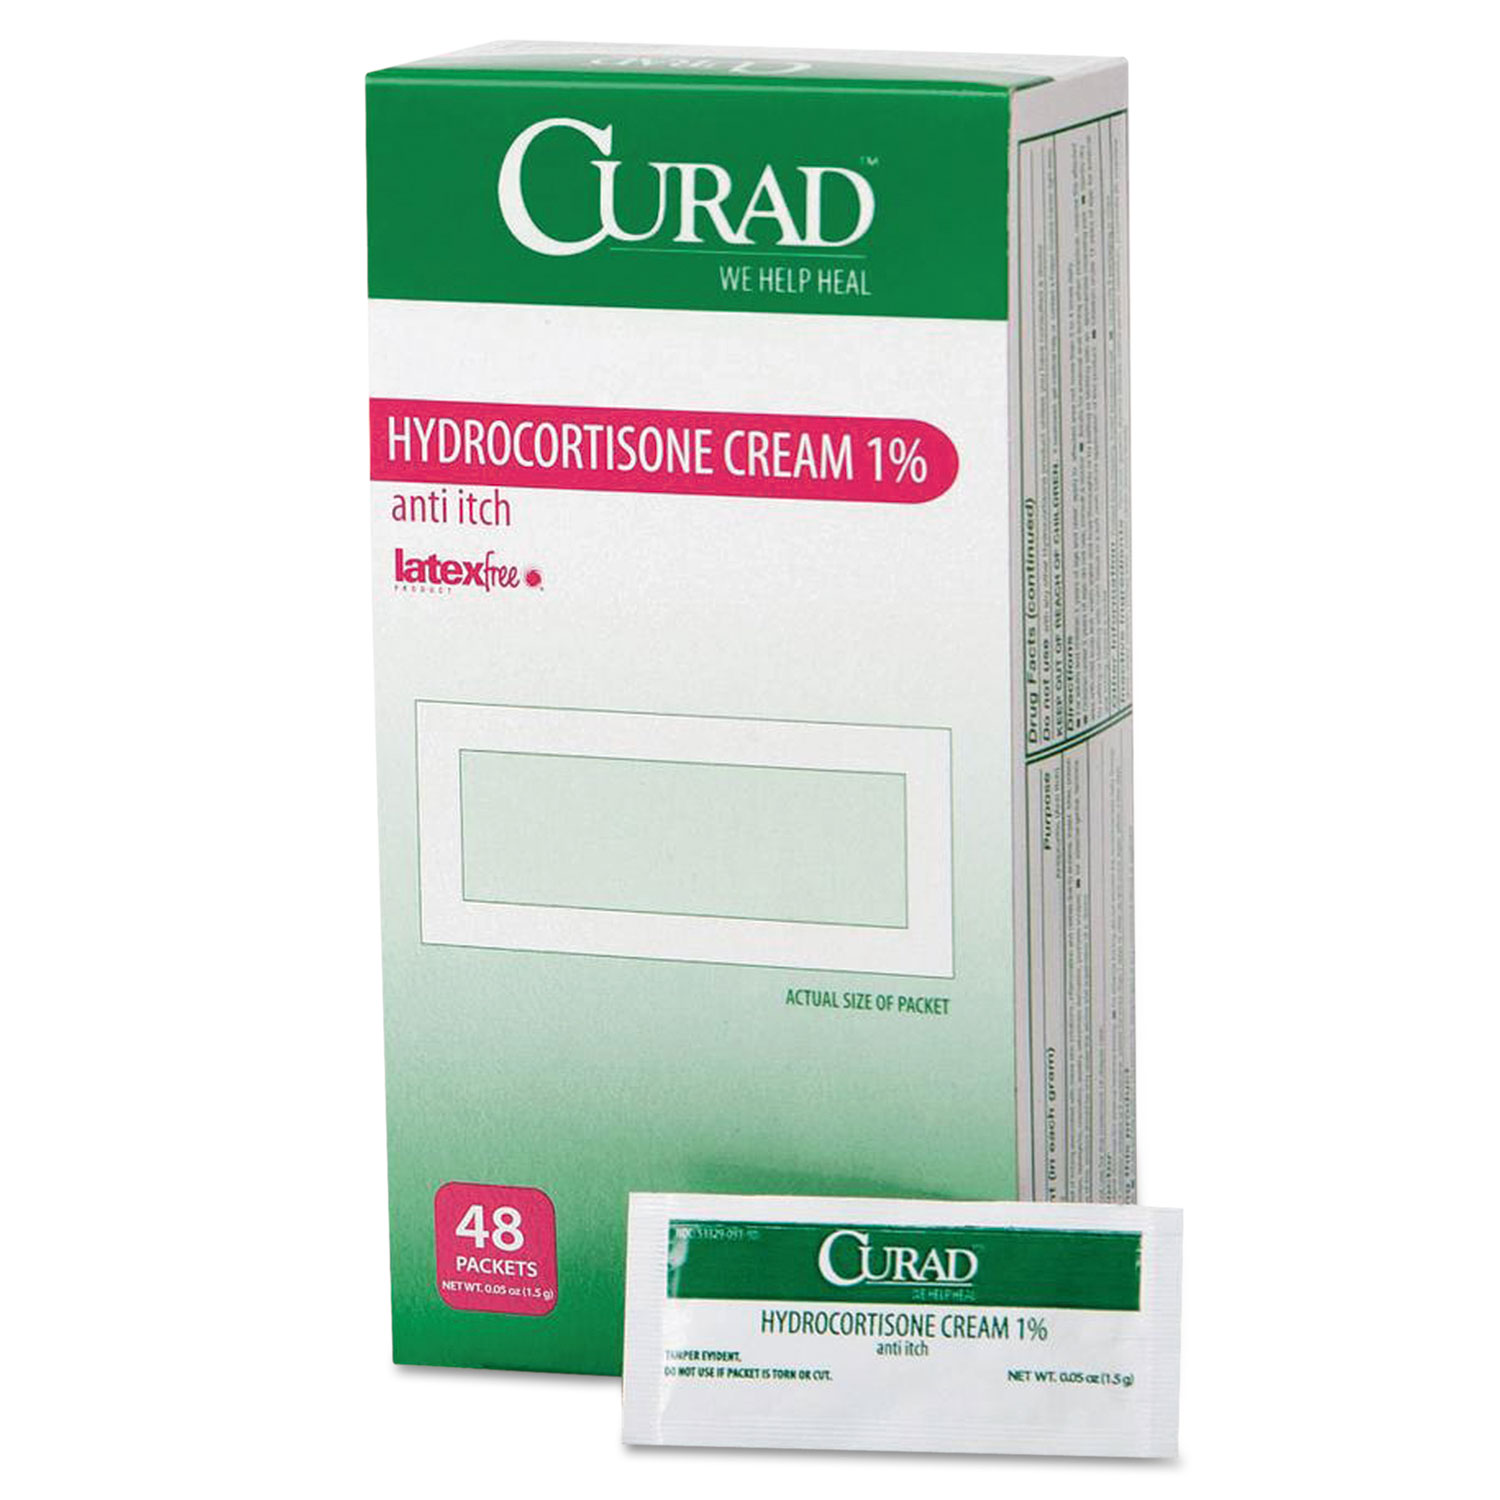  Curad CUR015408 Hydrocortisone Cream, 0.007 oz Foil Packet, 48/Box (MIICUR015408) 